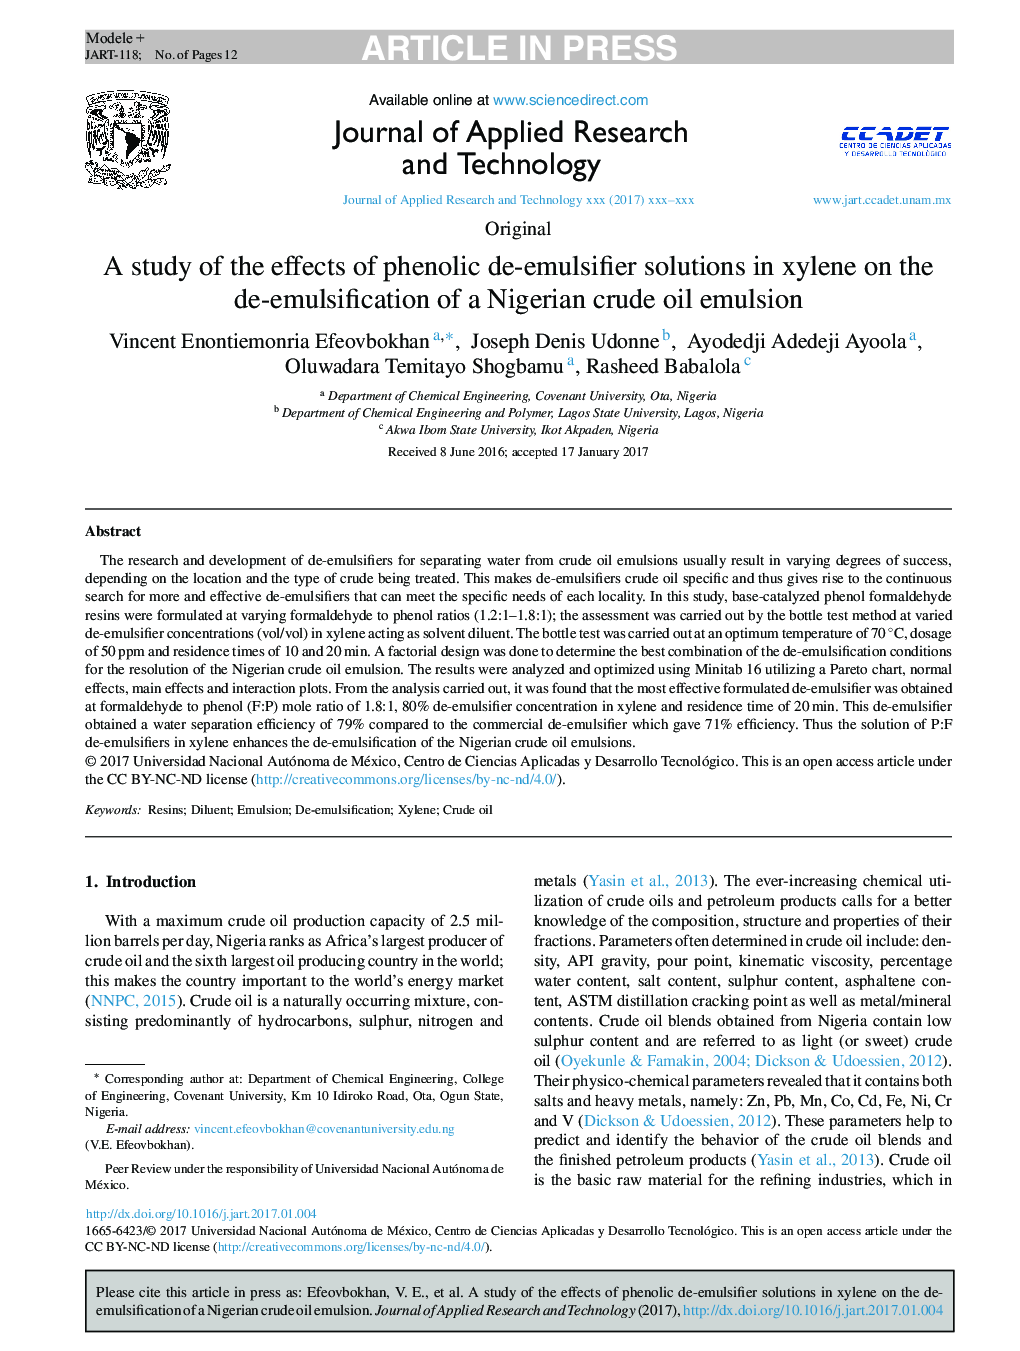 A study of the effects of phenolic de-emulsifier solutions in xylene on the de-emulsification of a Nigerian crude oil emulsion